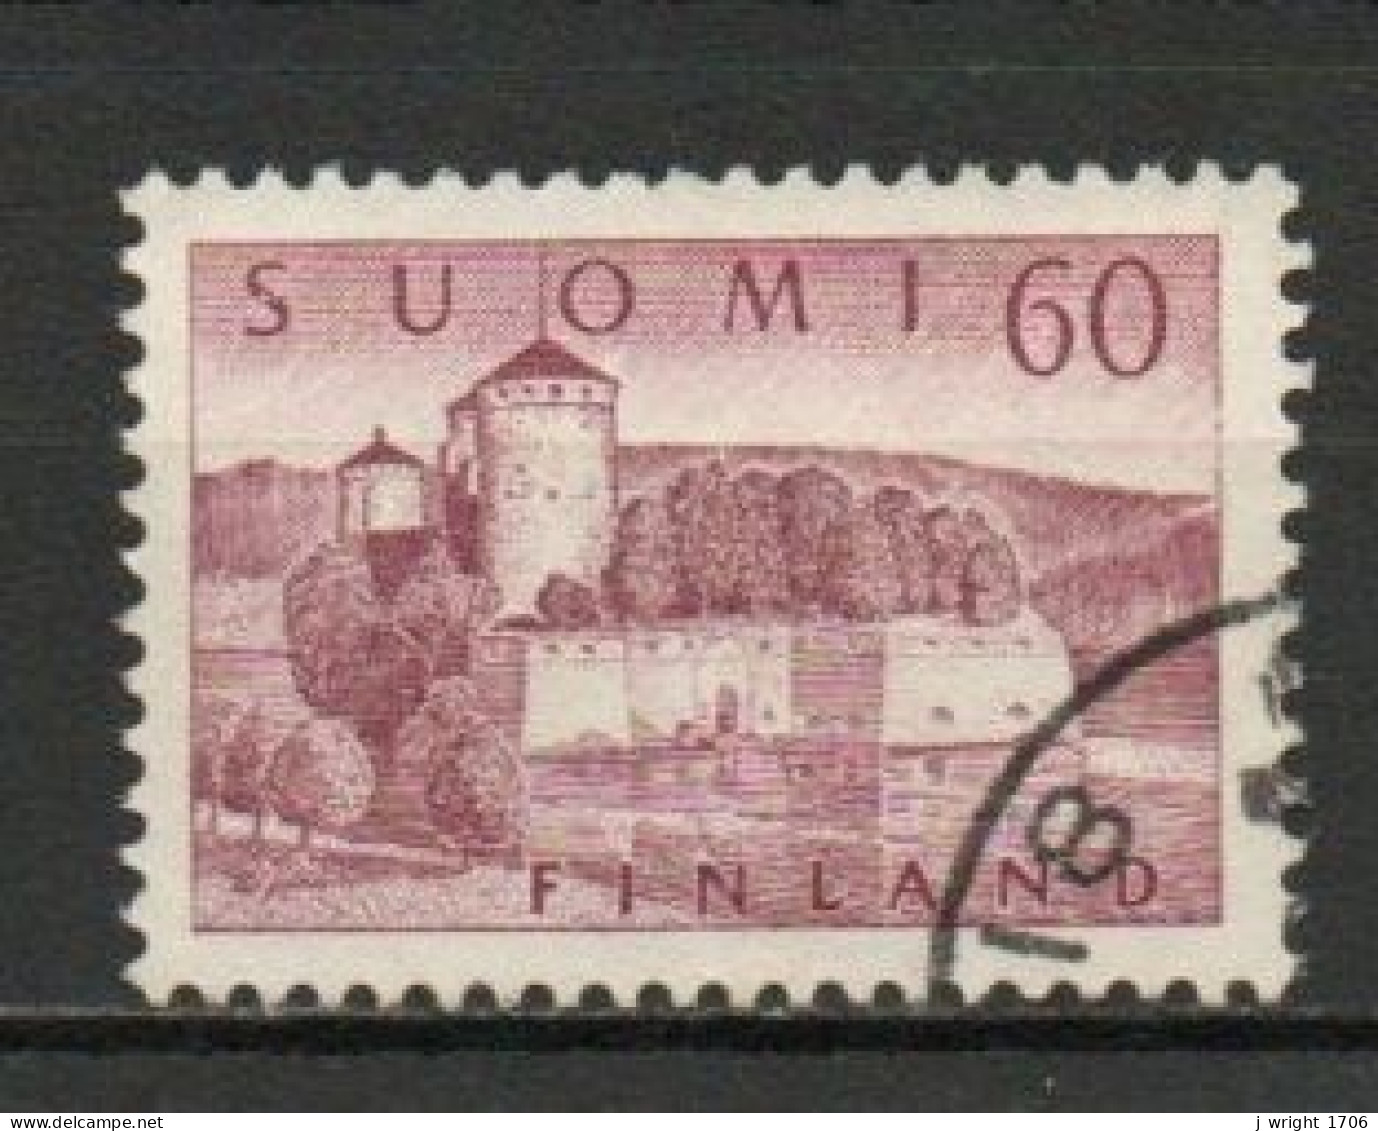 Finland, 1957, Olavinlinna Castle, 60mk, USED - Oblitérés